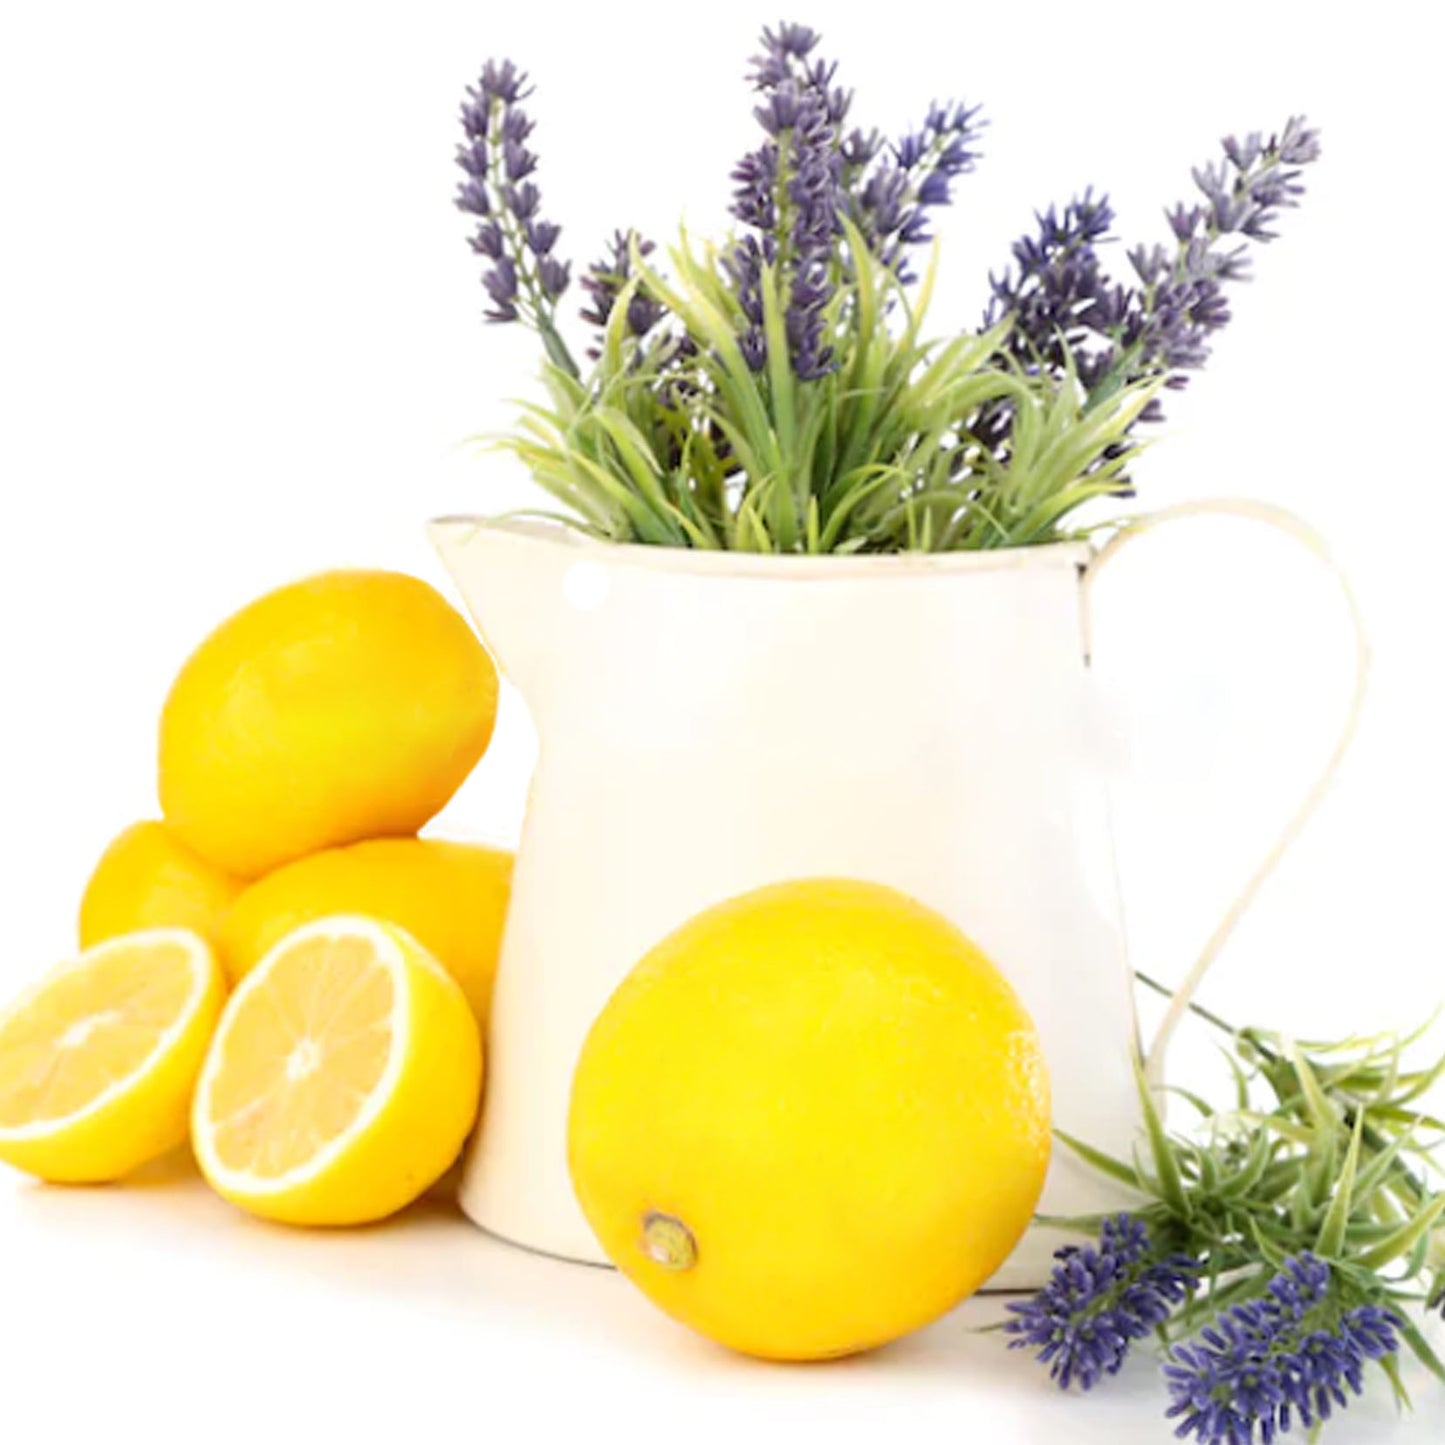 Lemon & Lavender Fragrance Oil | Truly Personal | Candles, Wax Melts, Soap, Bath Bombs